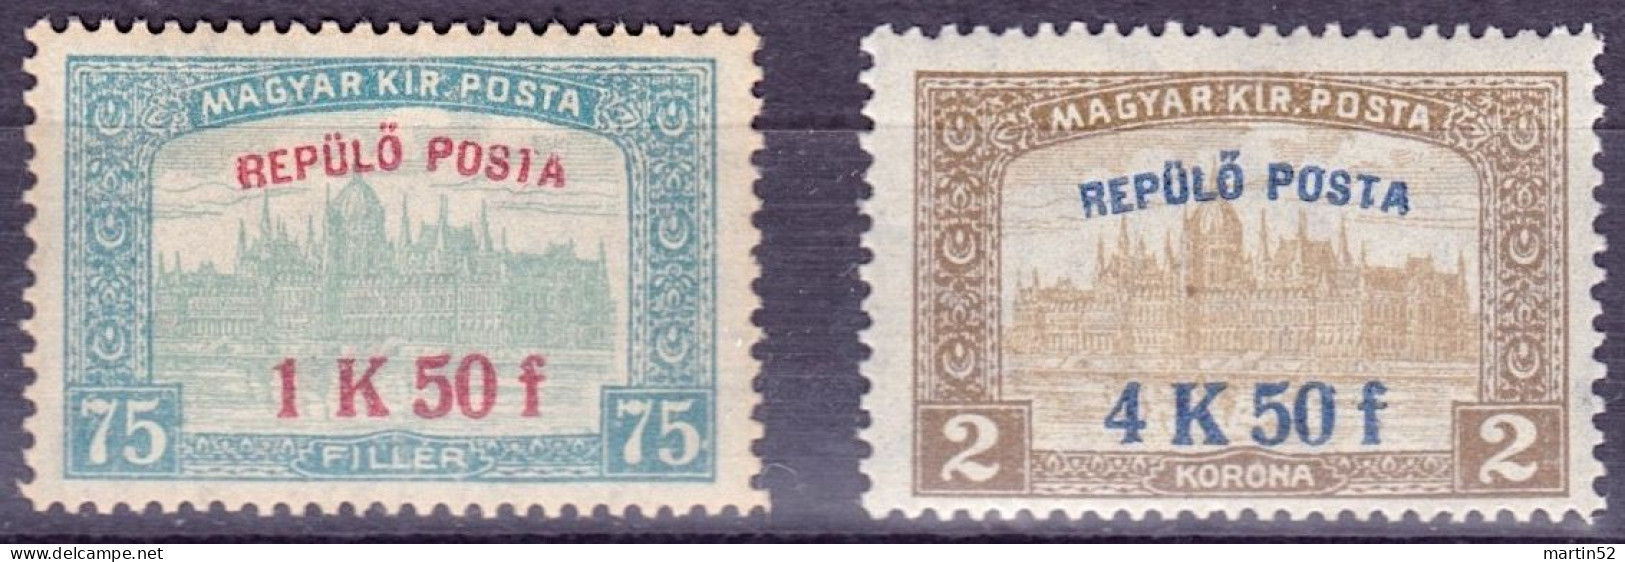 MAGYAR KIR.POSTA Hongrie Hungary Ungarn 1918: REPÜLÖ POSTA Michel-N° 210-211 ** MNH (Michel 30.00 Euro) - Unused Stamps